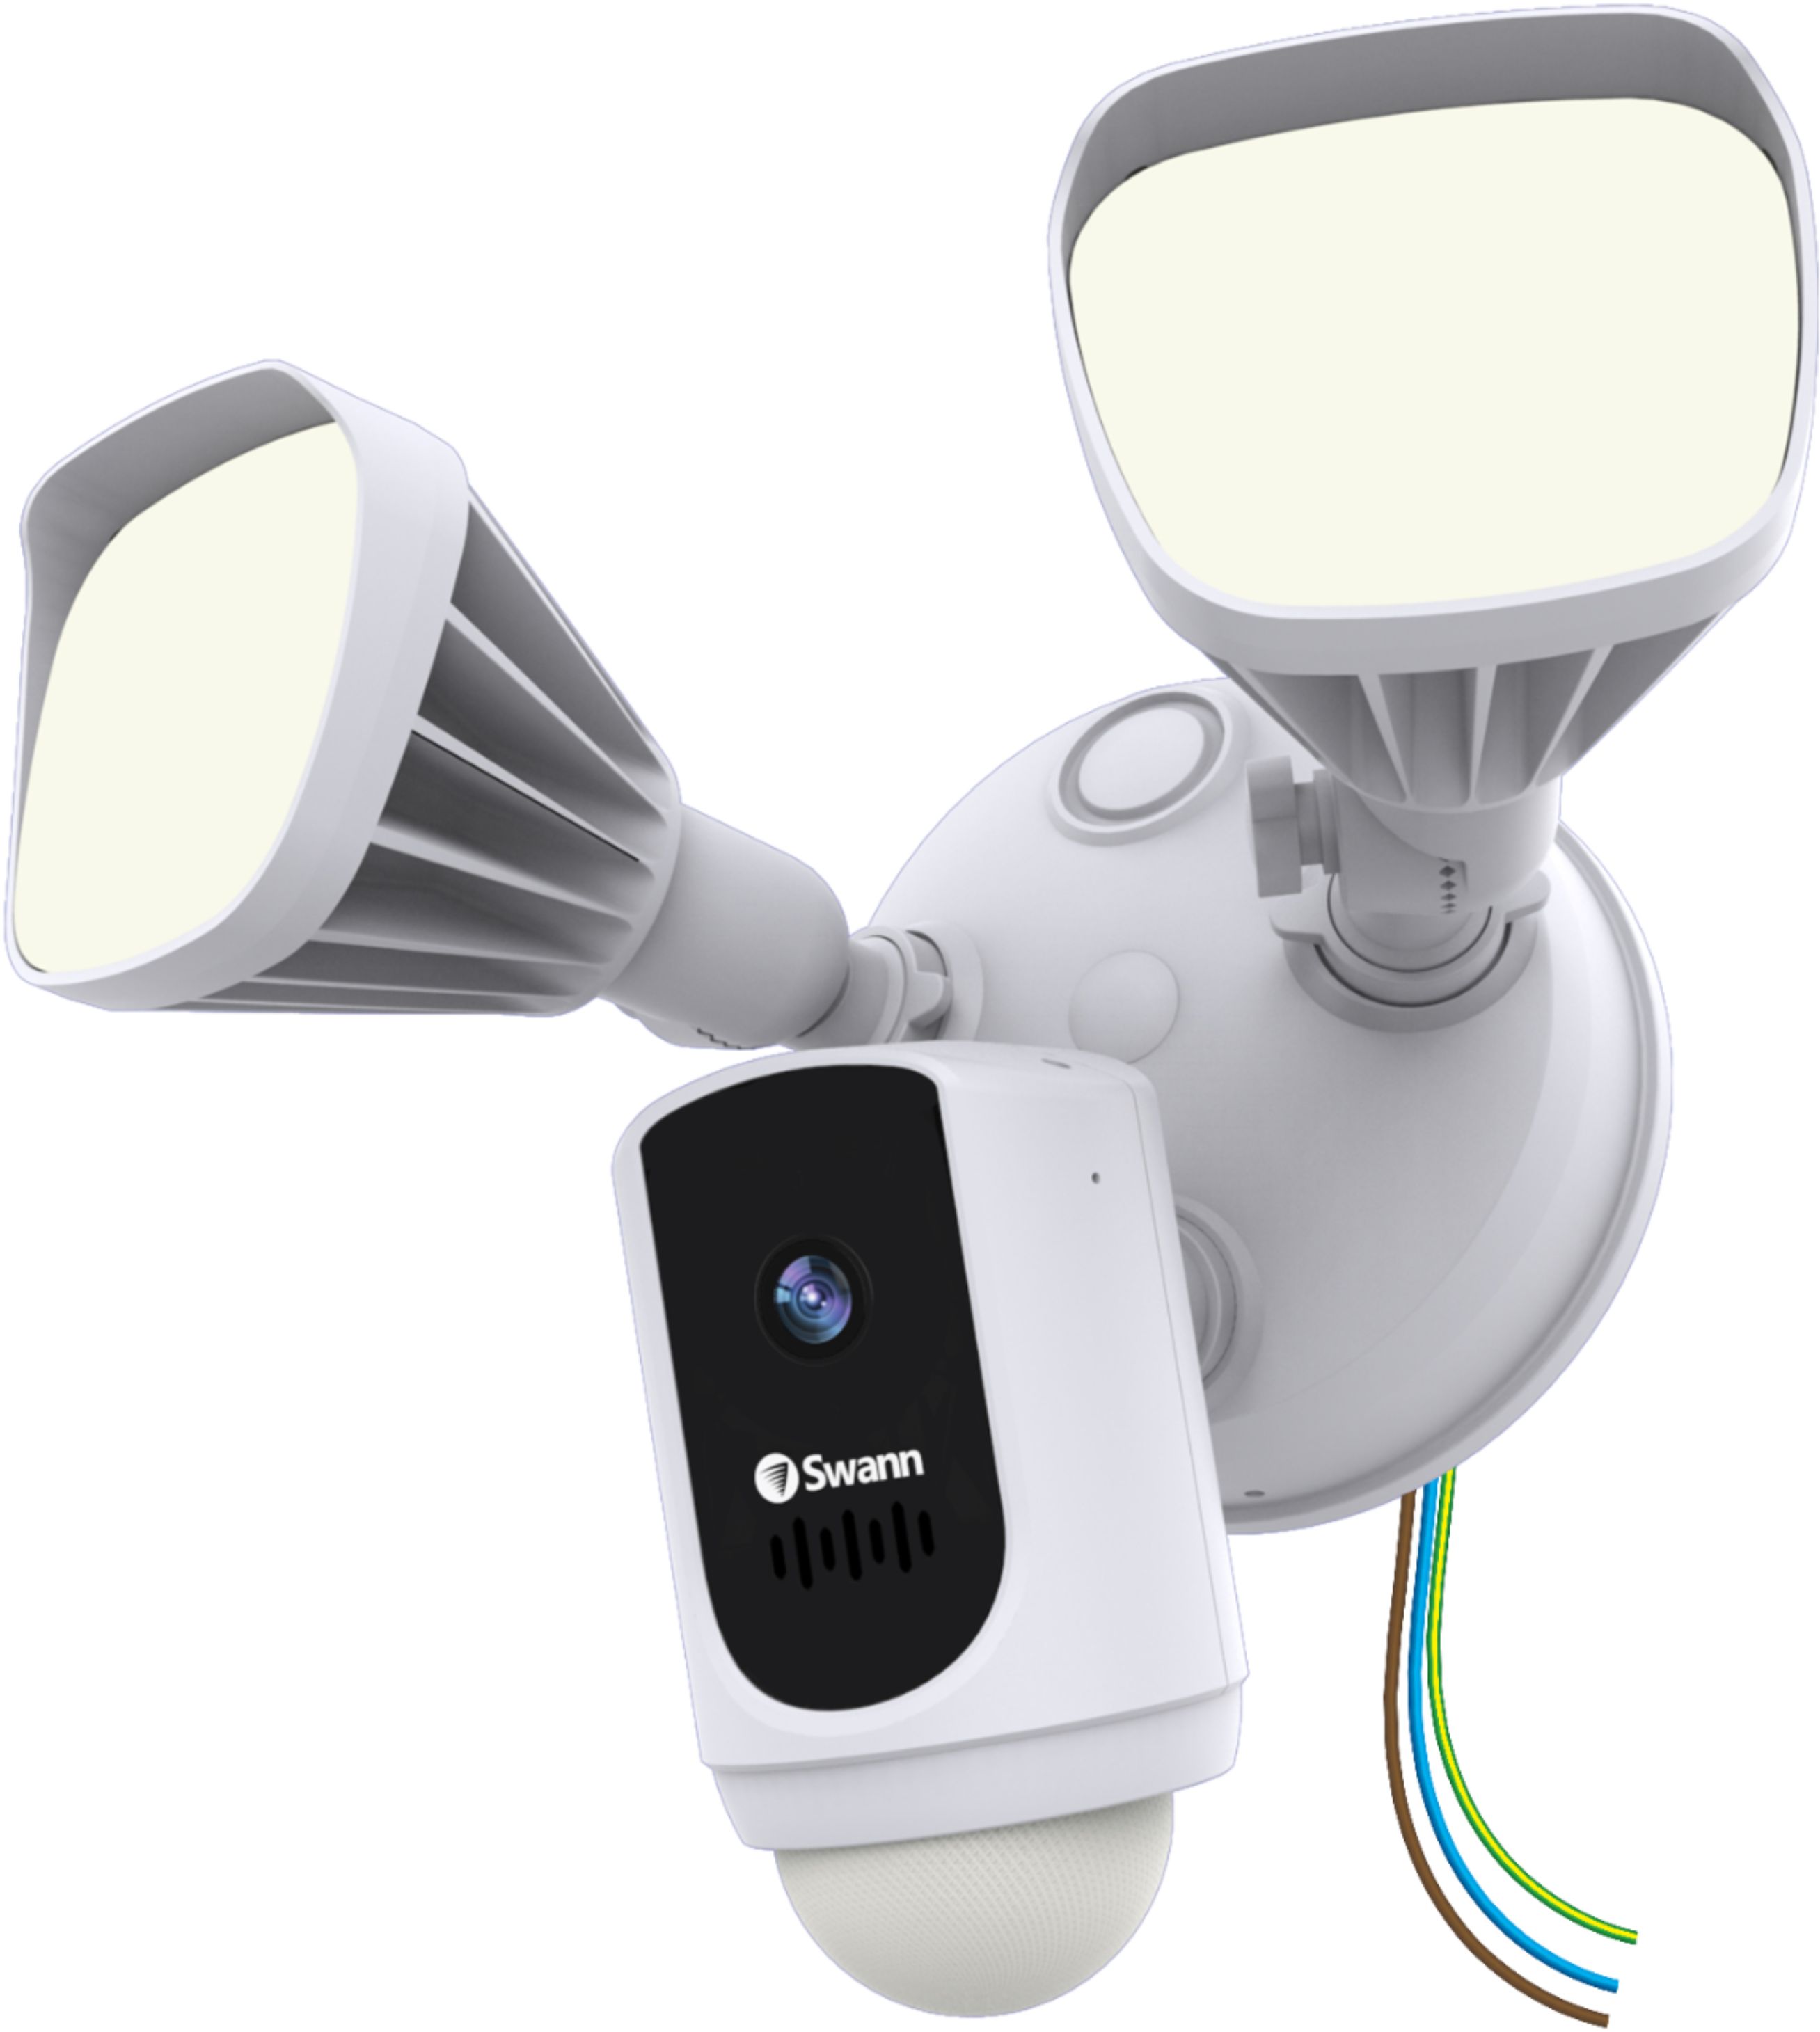 wireless floodlight security camera